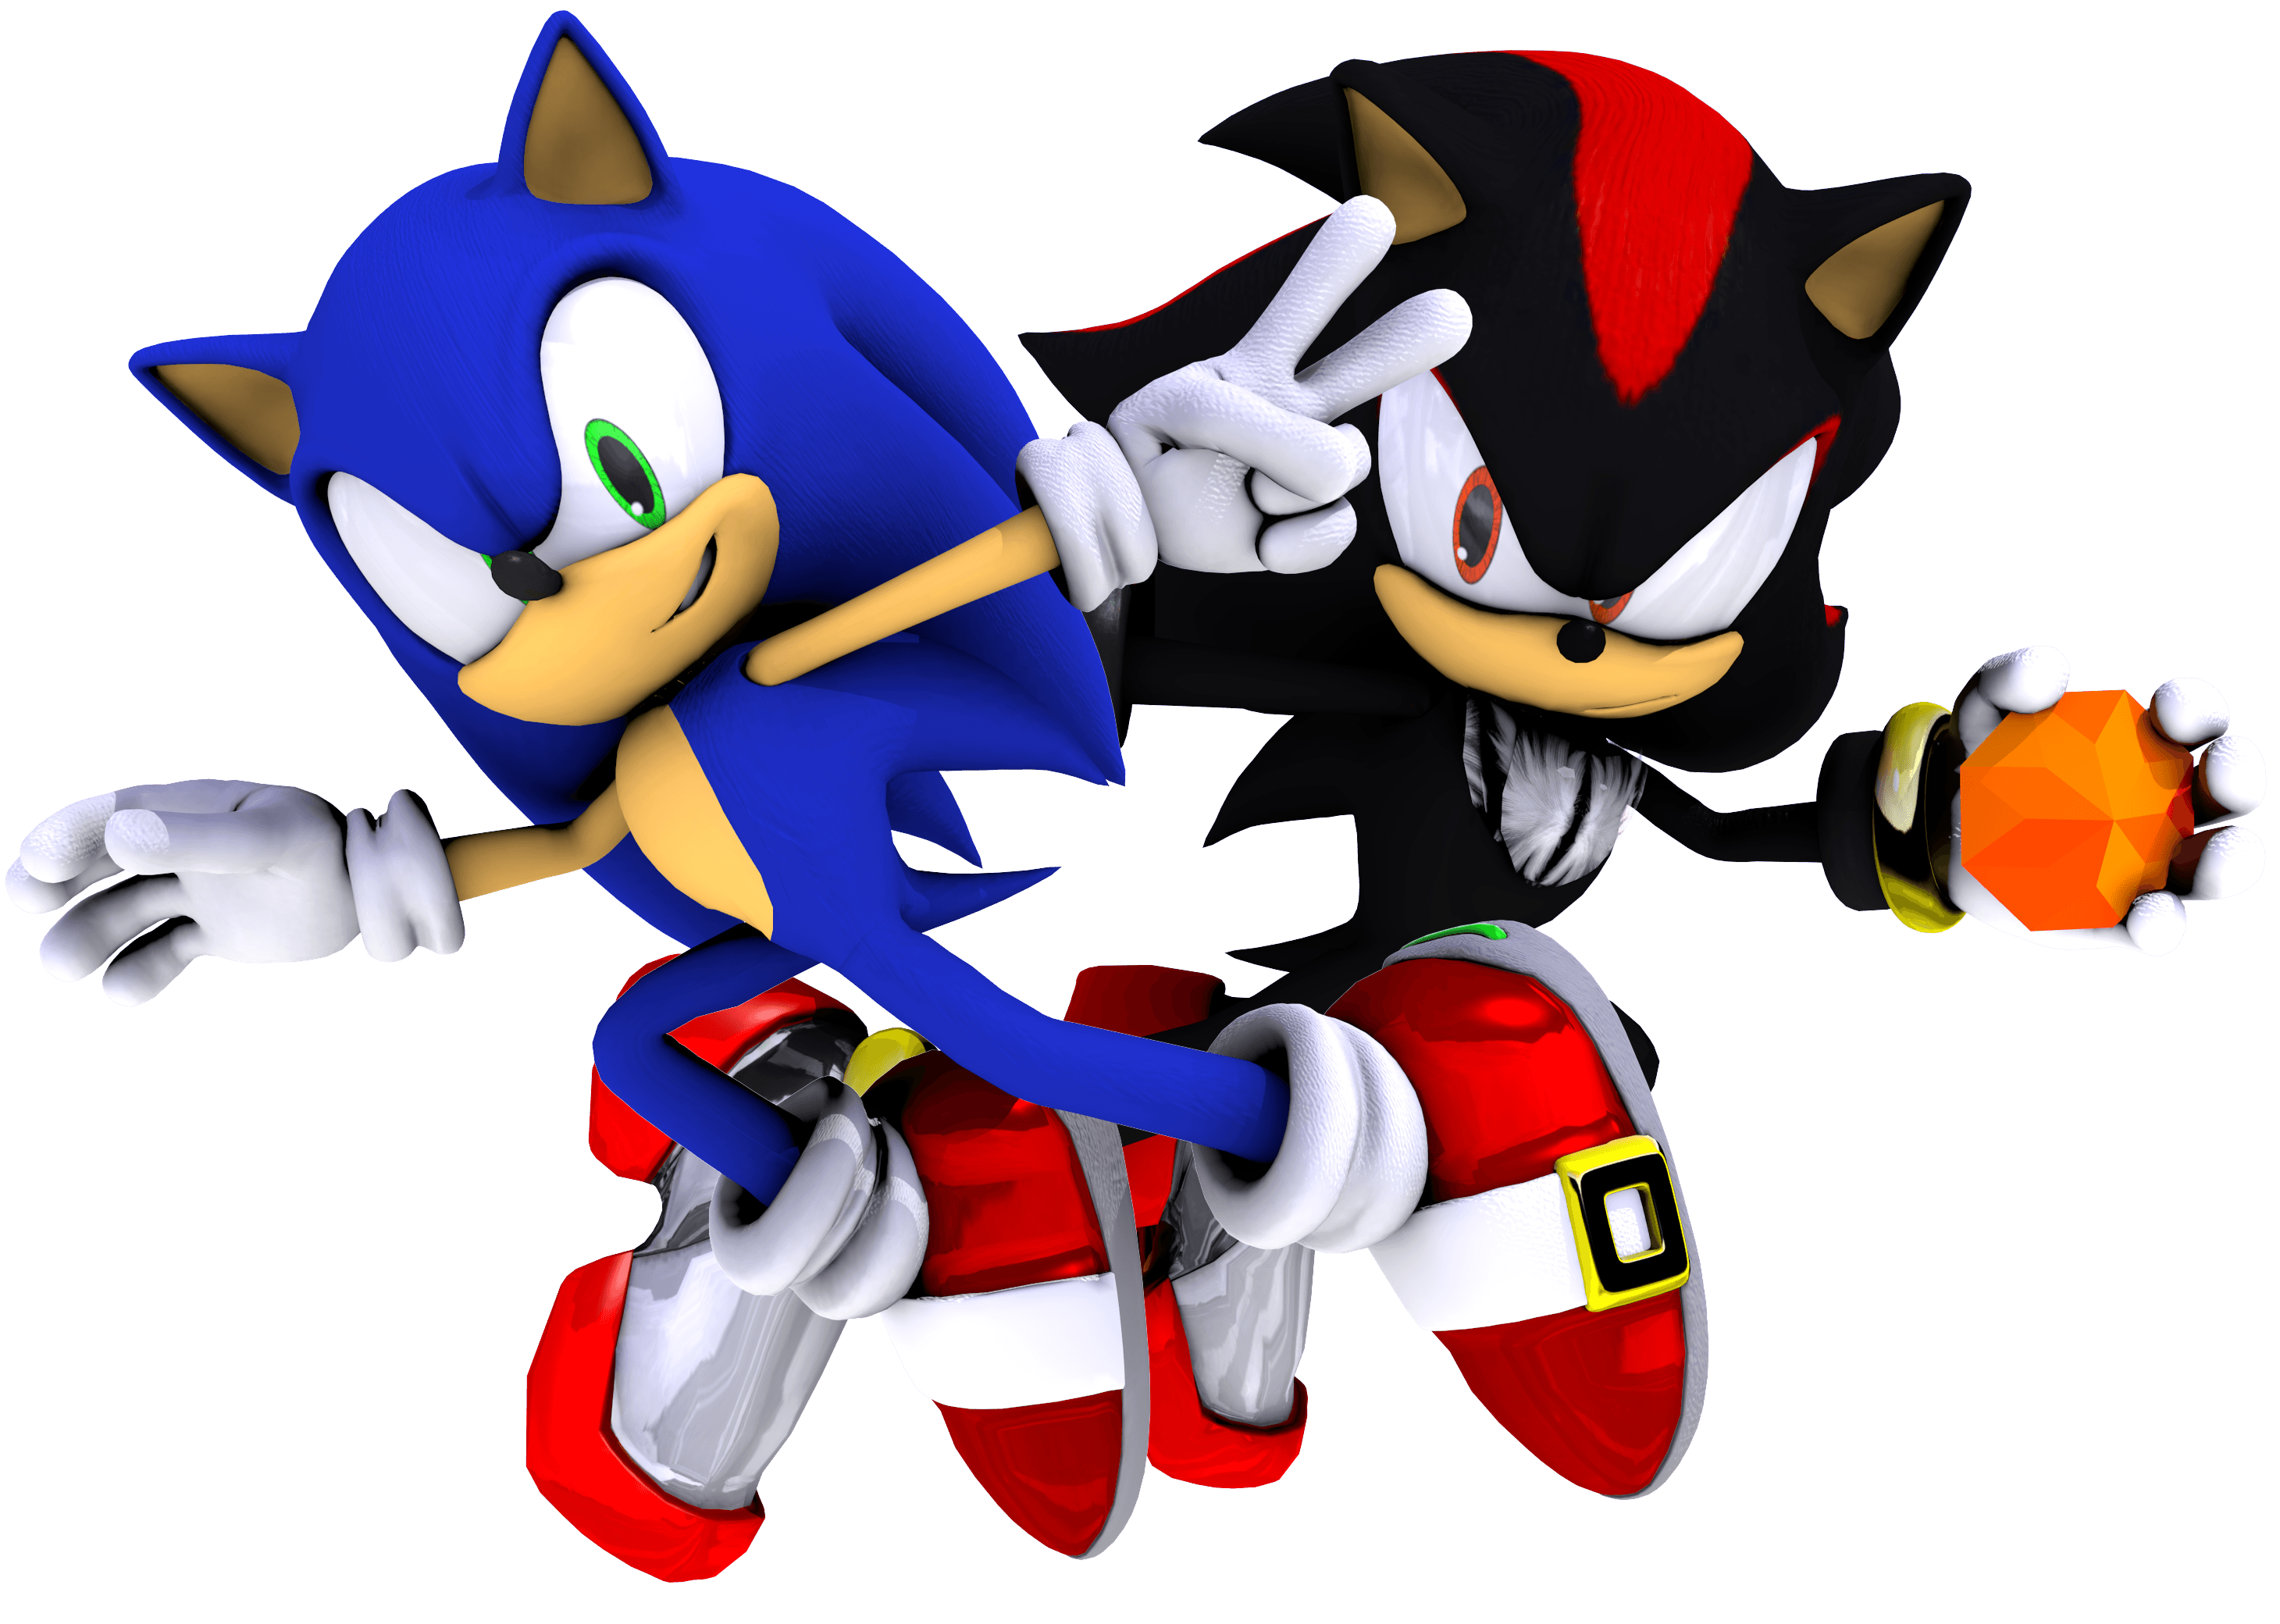 Shadow adventure DX. Sonic Adventure 2 Poses edit